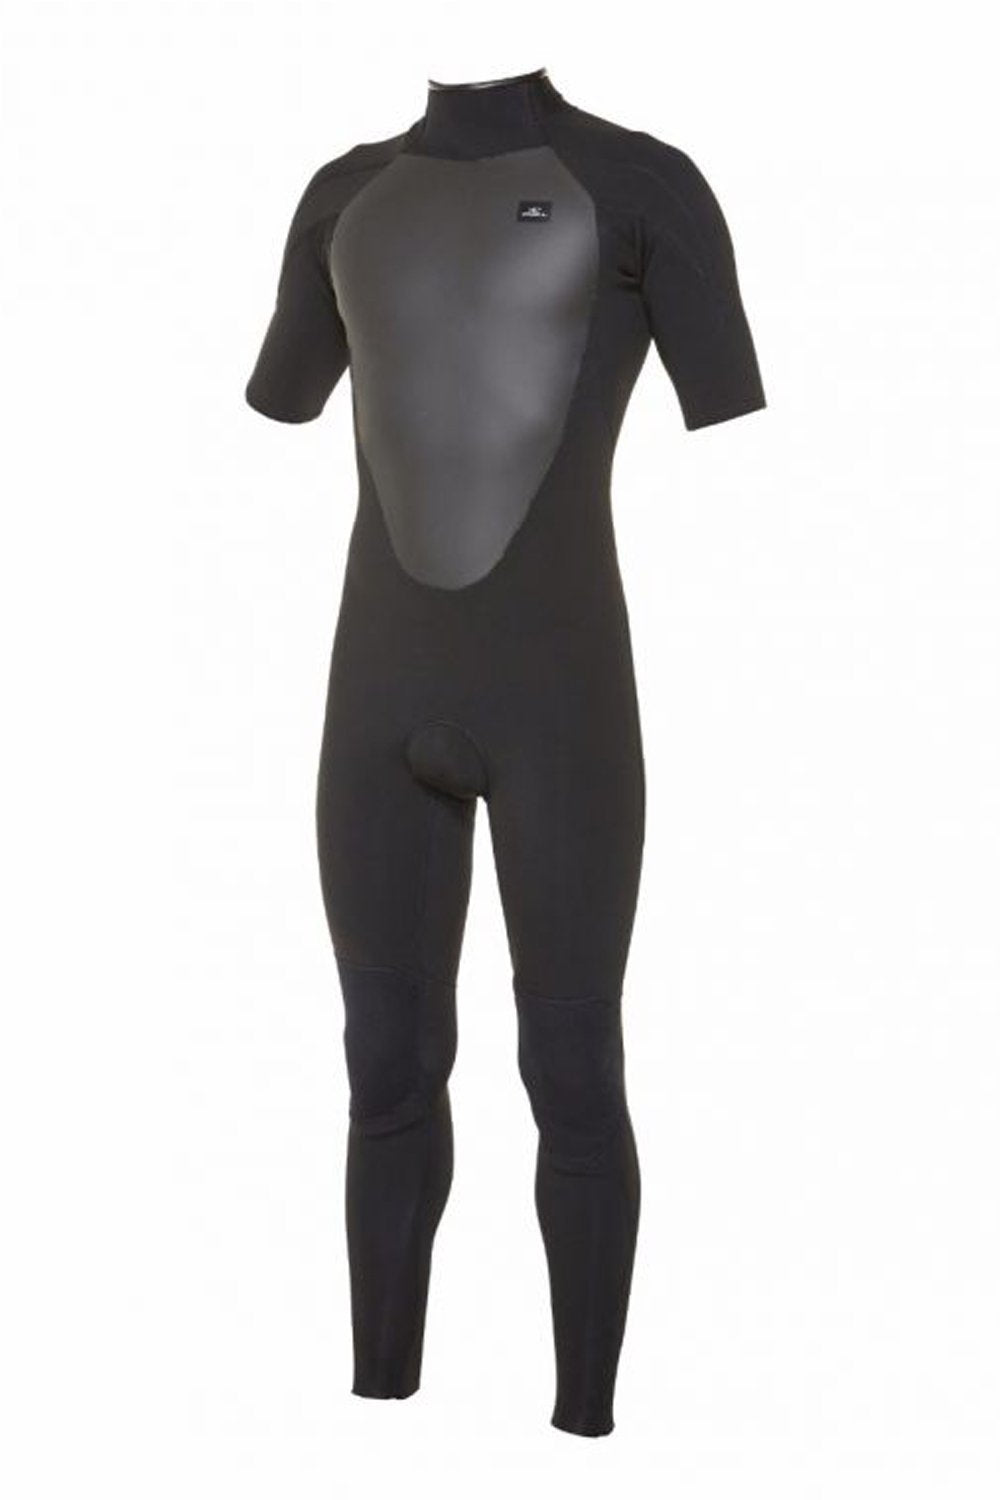 O'NEILL - Defender Short Sleeve 2mm Steamer Back Zip Wetsuit - Black